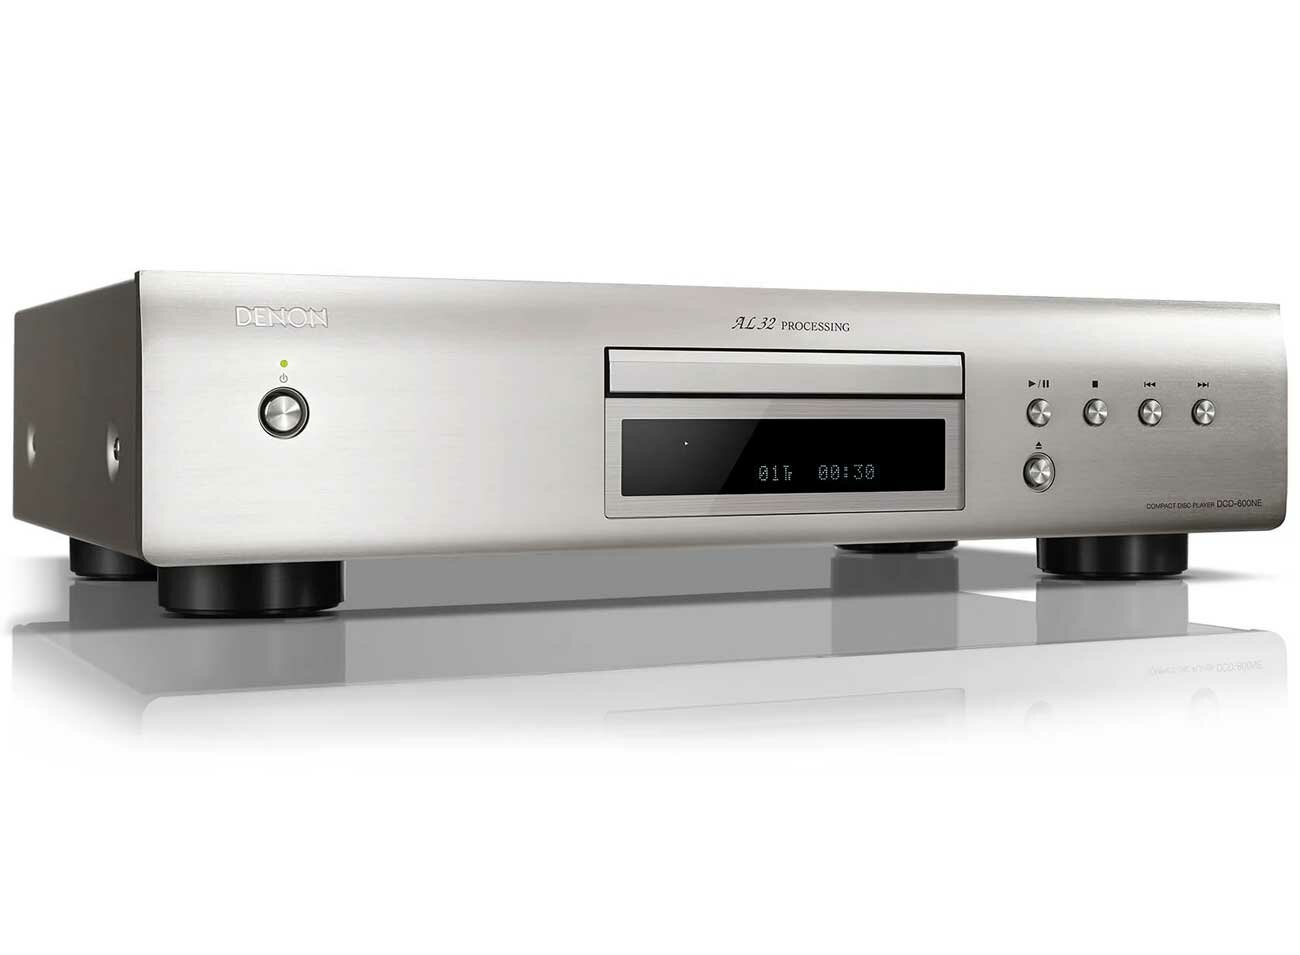 CD-проигрыватель Denon DCD-600NE Premium Silver